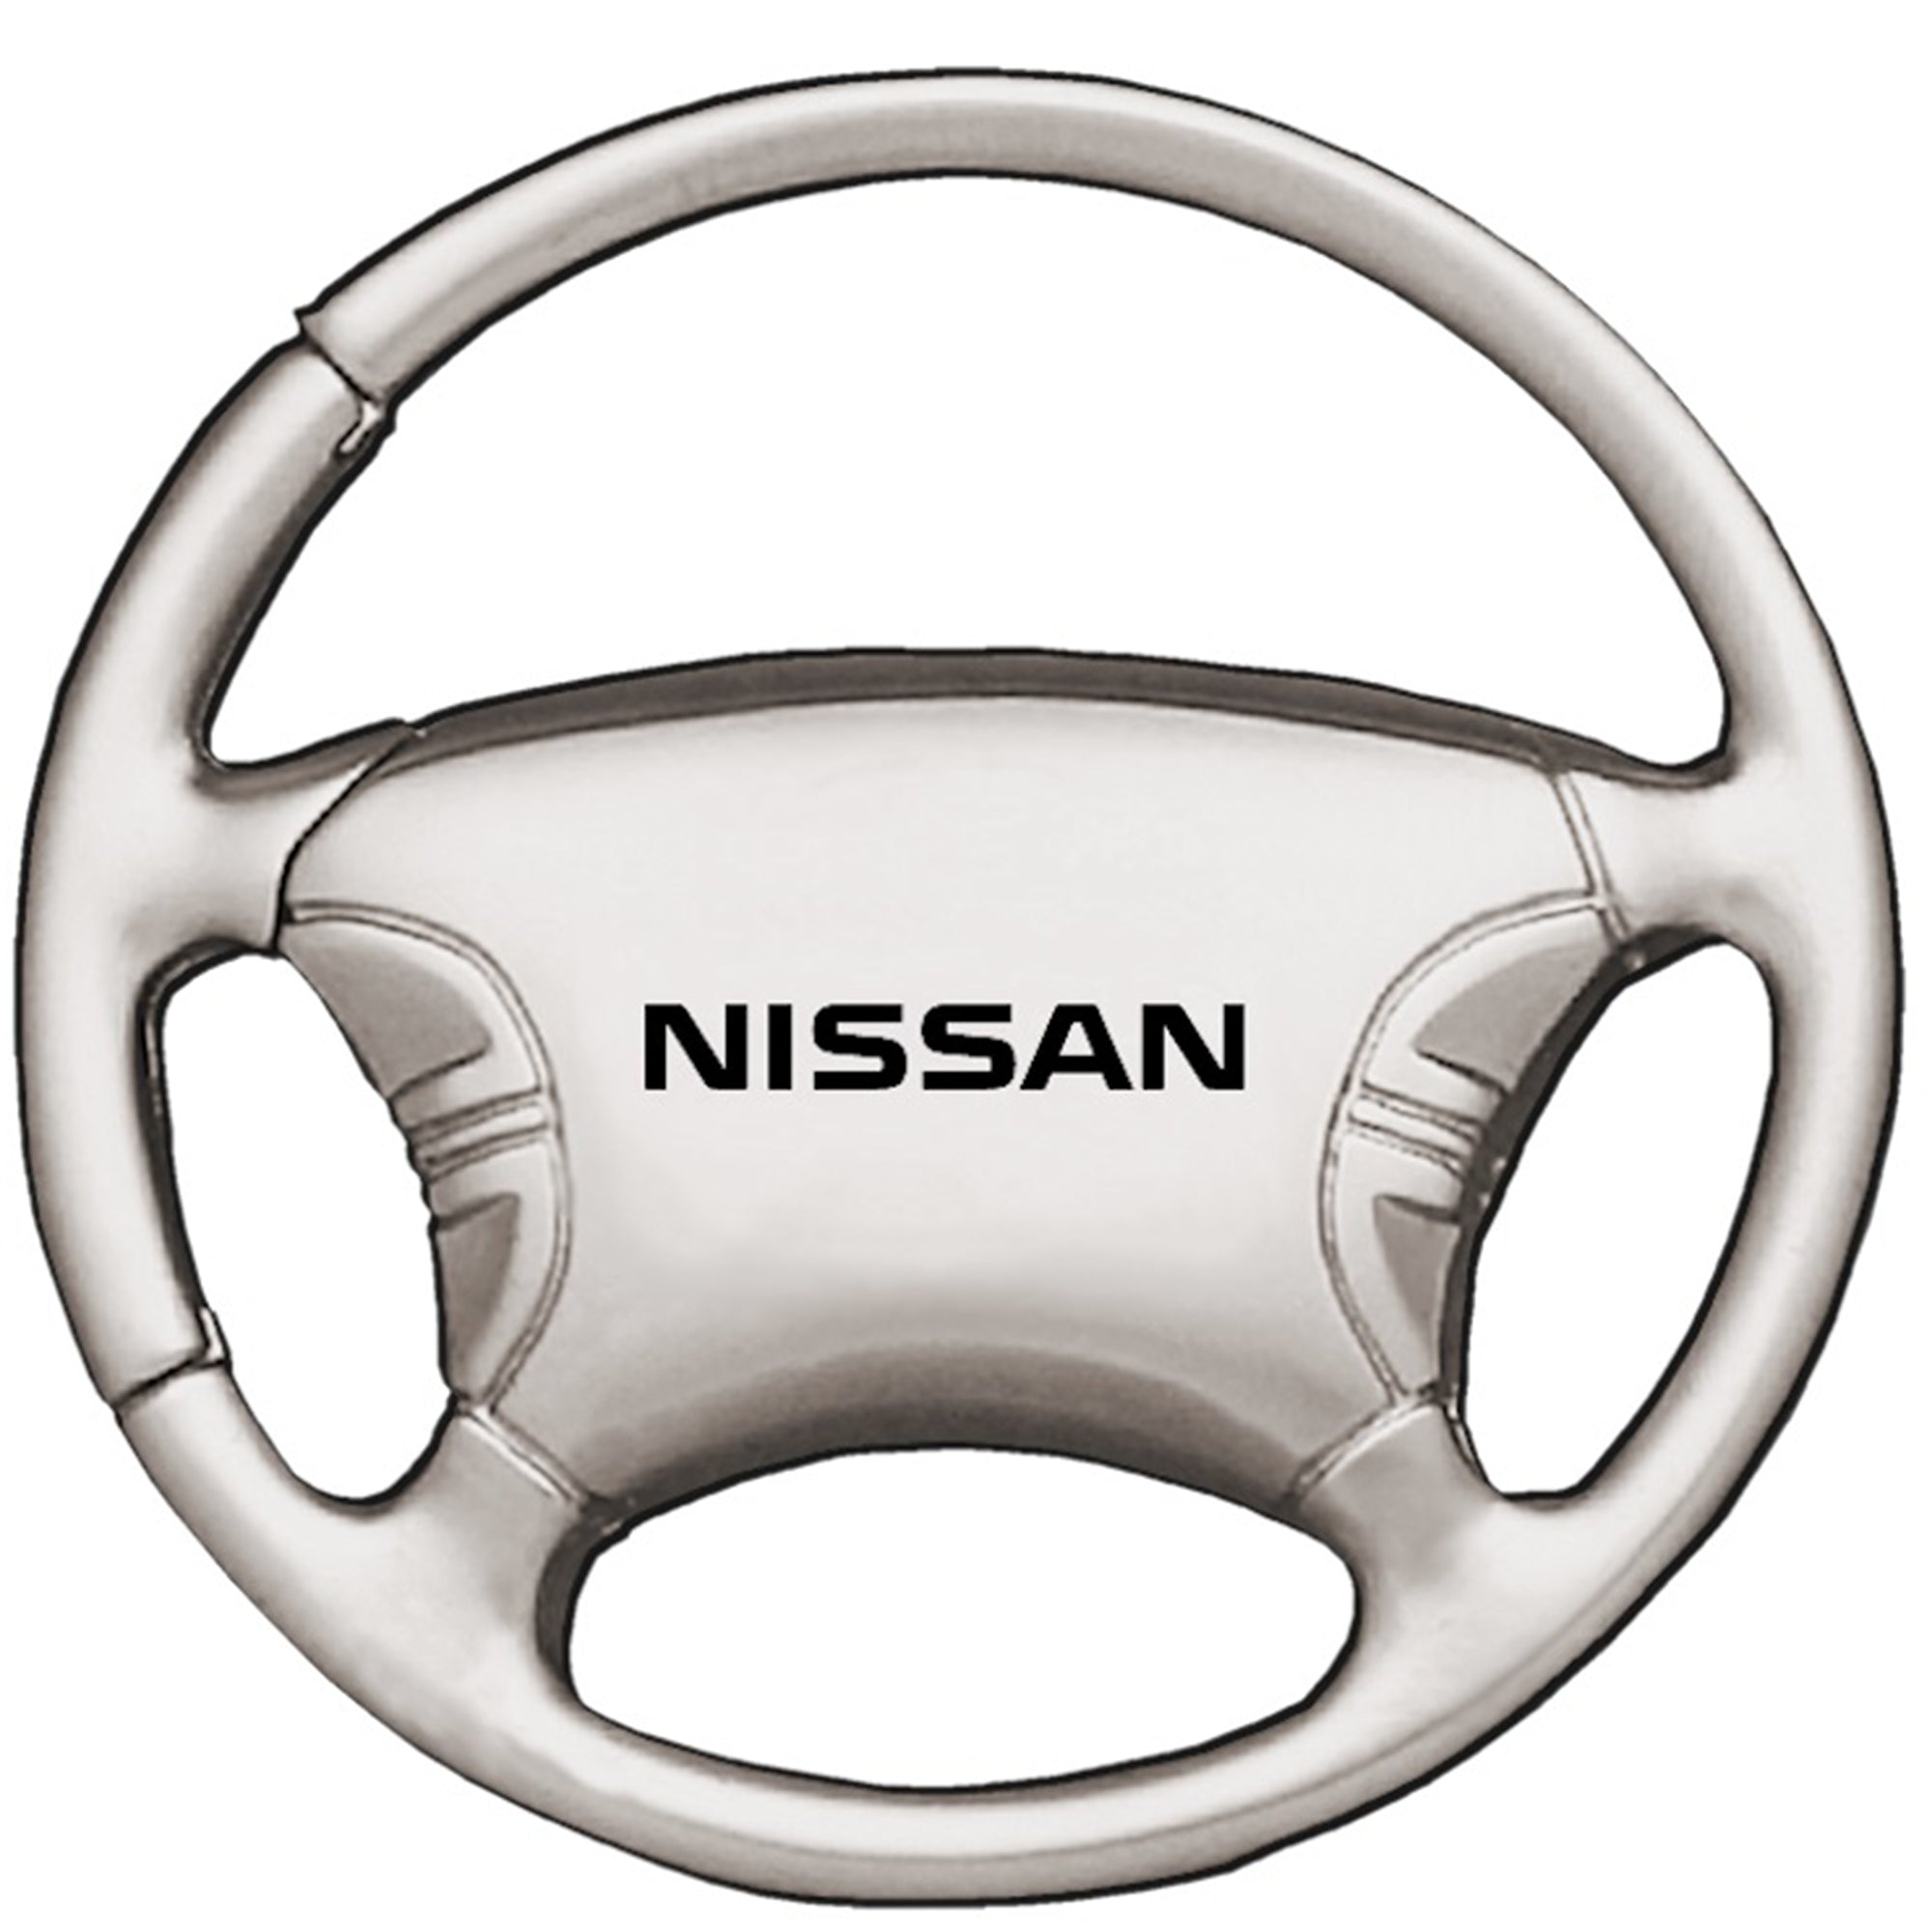 Nissan Key Chain